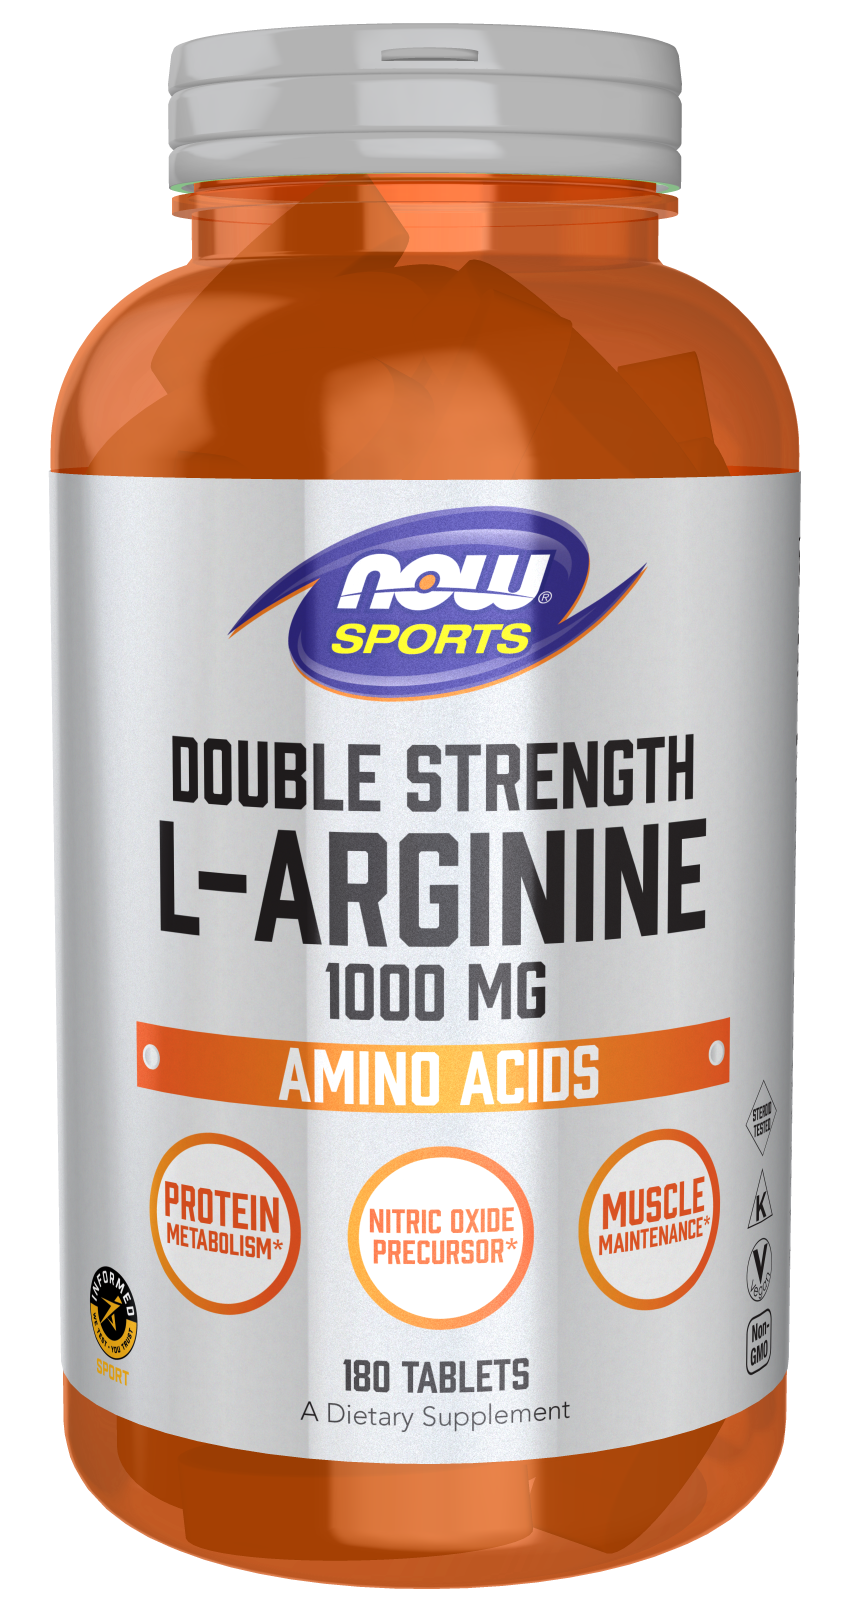 L-Arginine 1000 mg, Double Strength - 180 Tablets Bottle Front